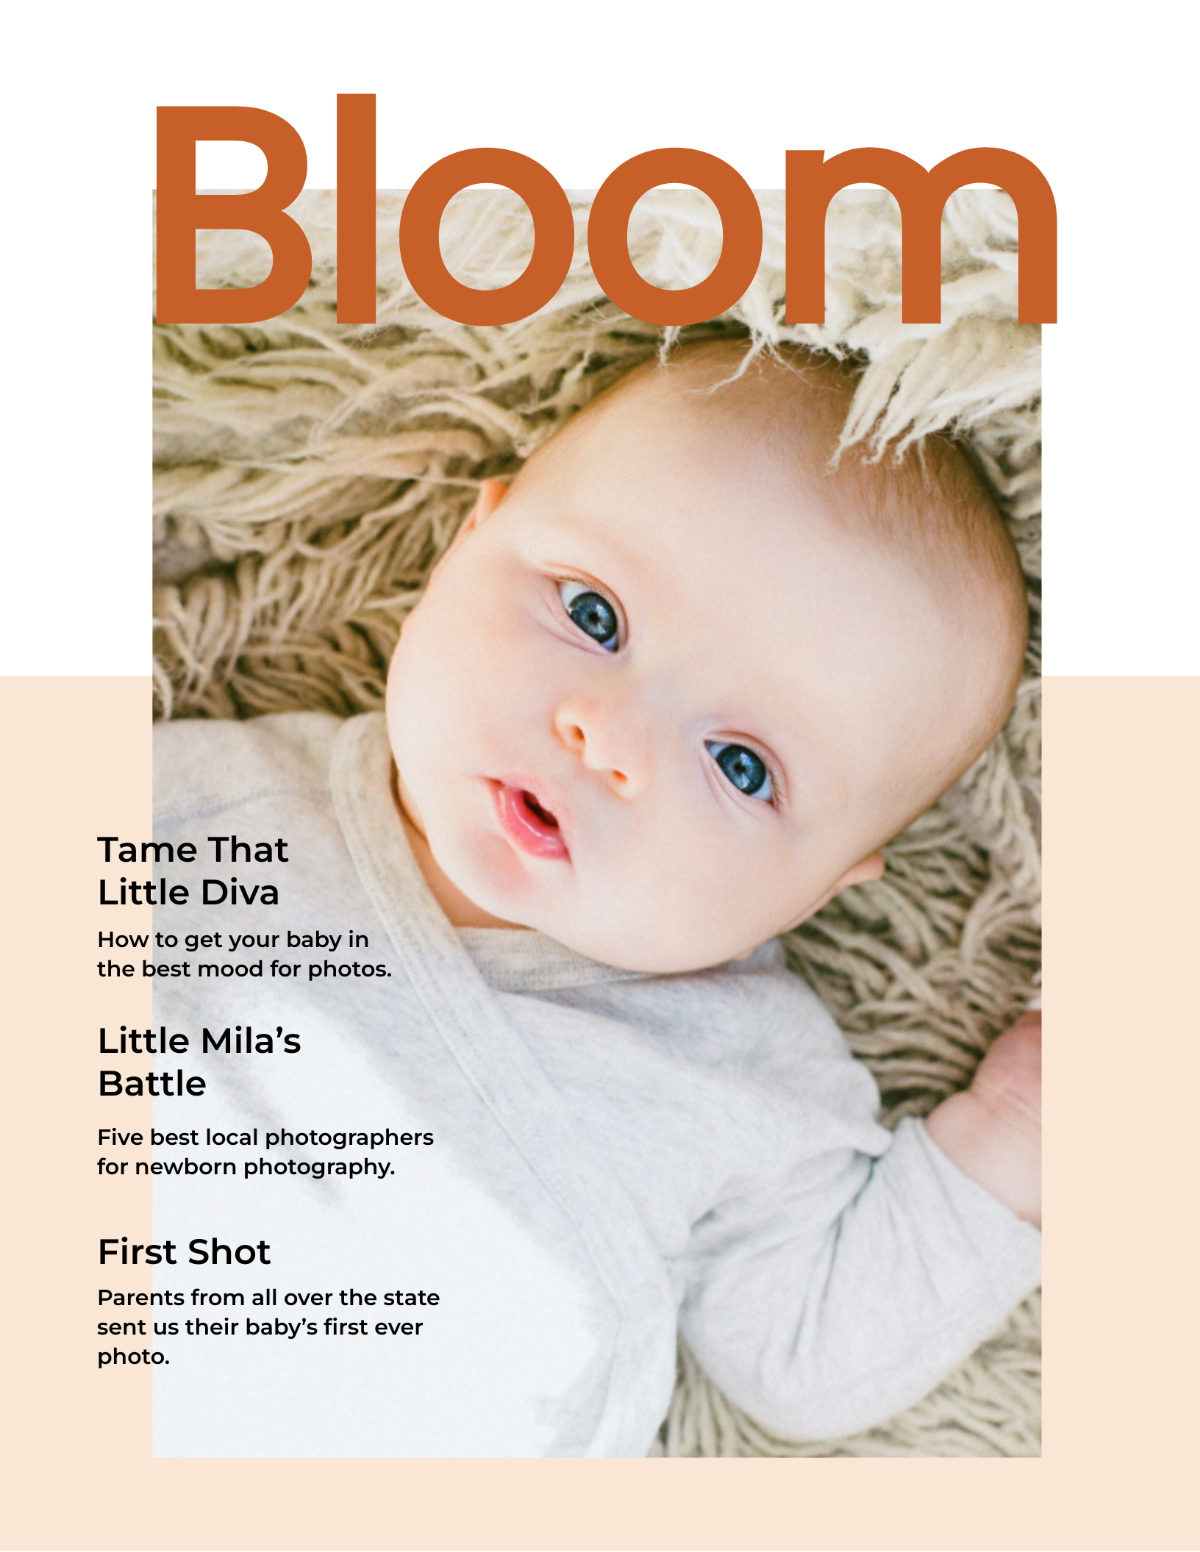 Newborn Photography Magazine Template